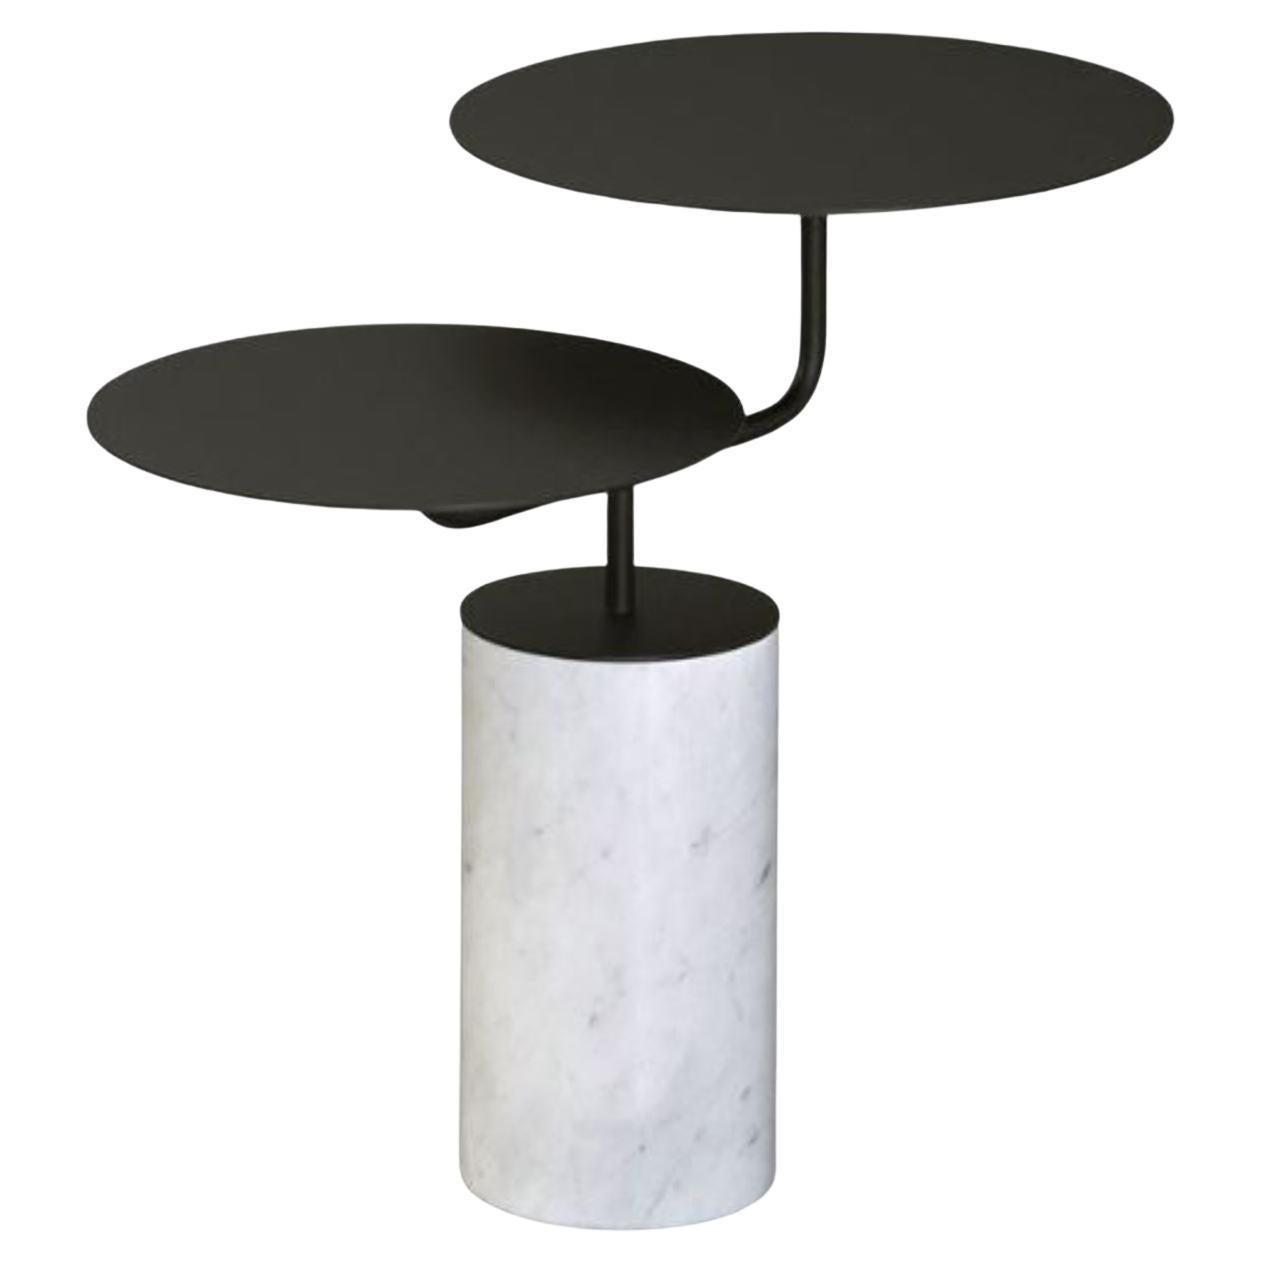 Groom Side Table by Radar For Sale